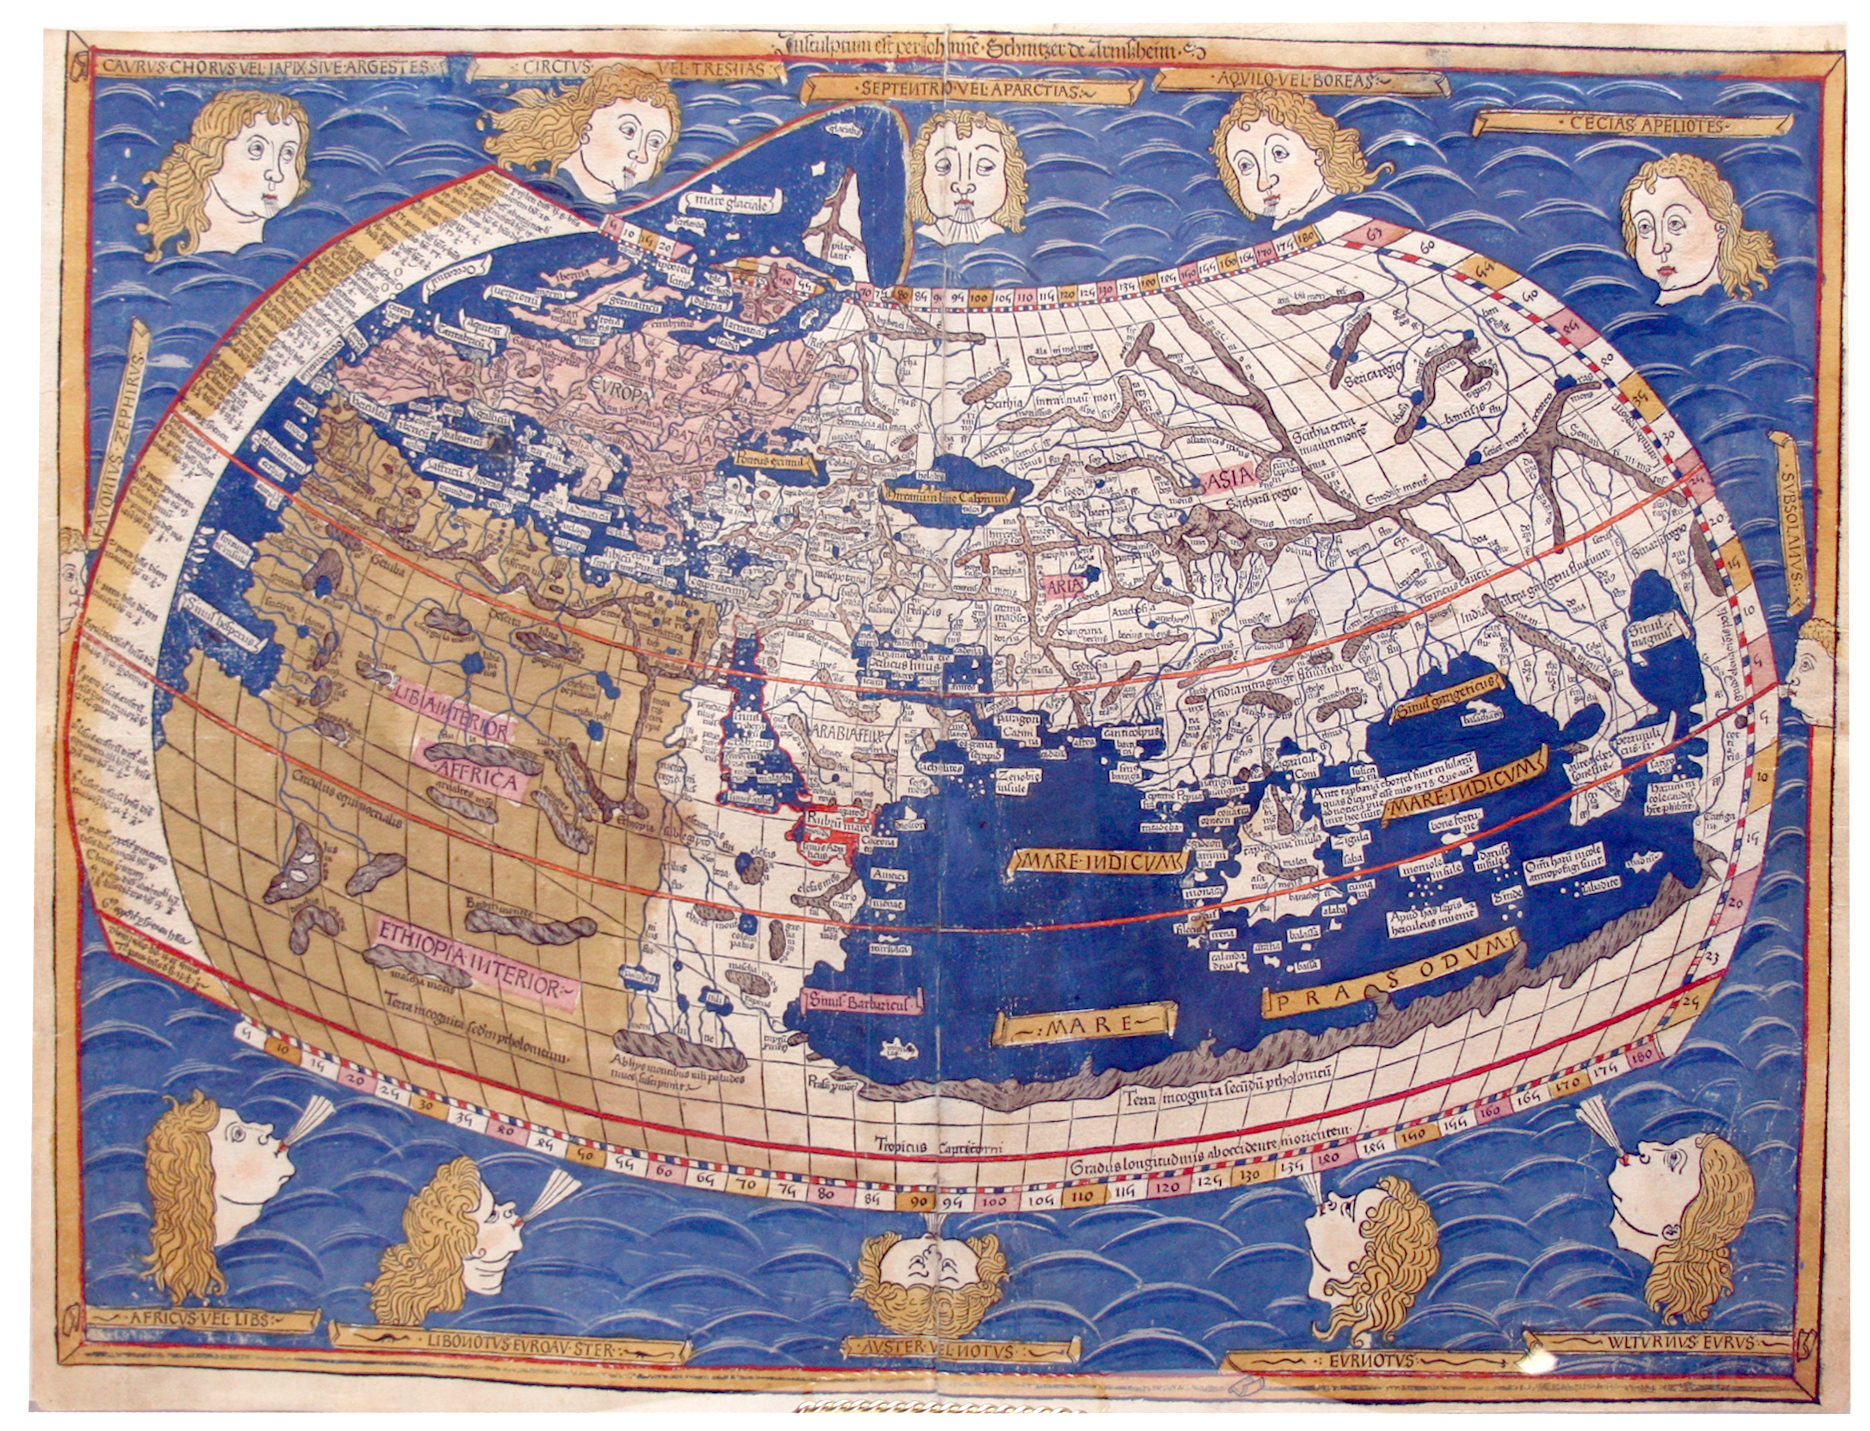 ptolemy_map_15th_century.jpg